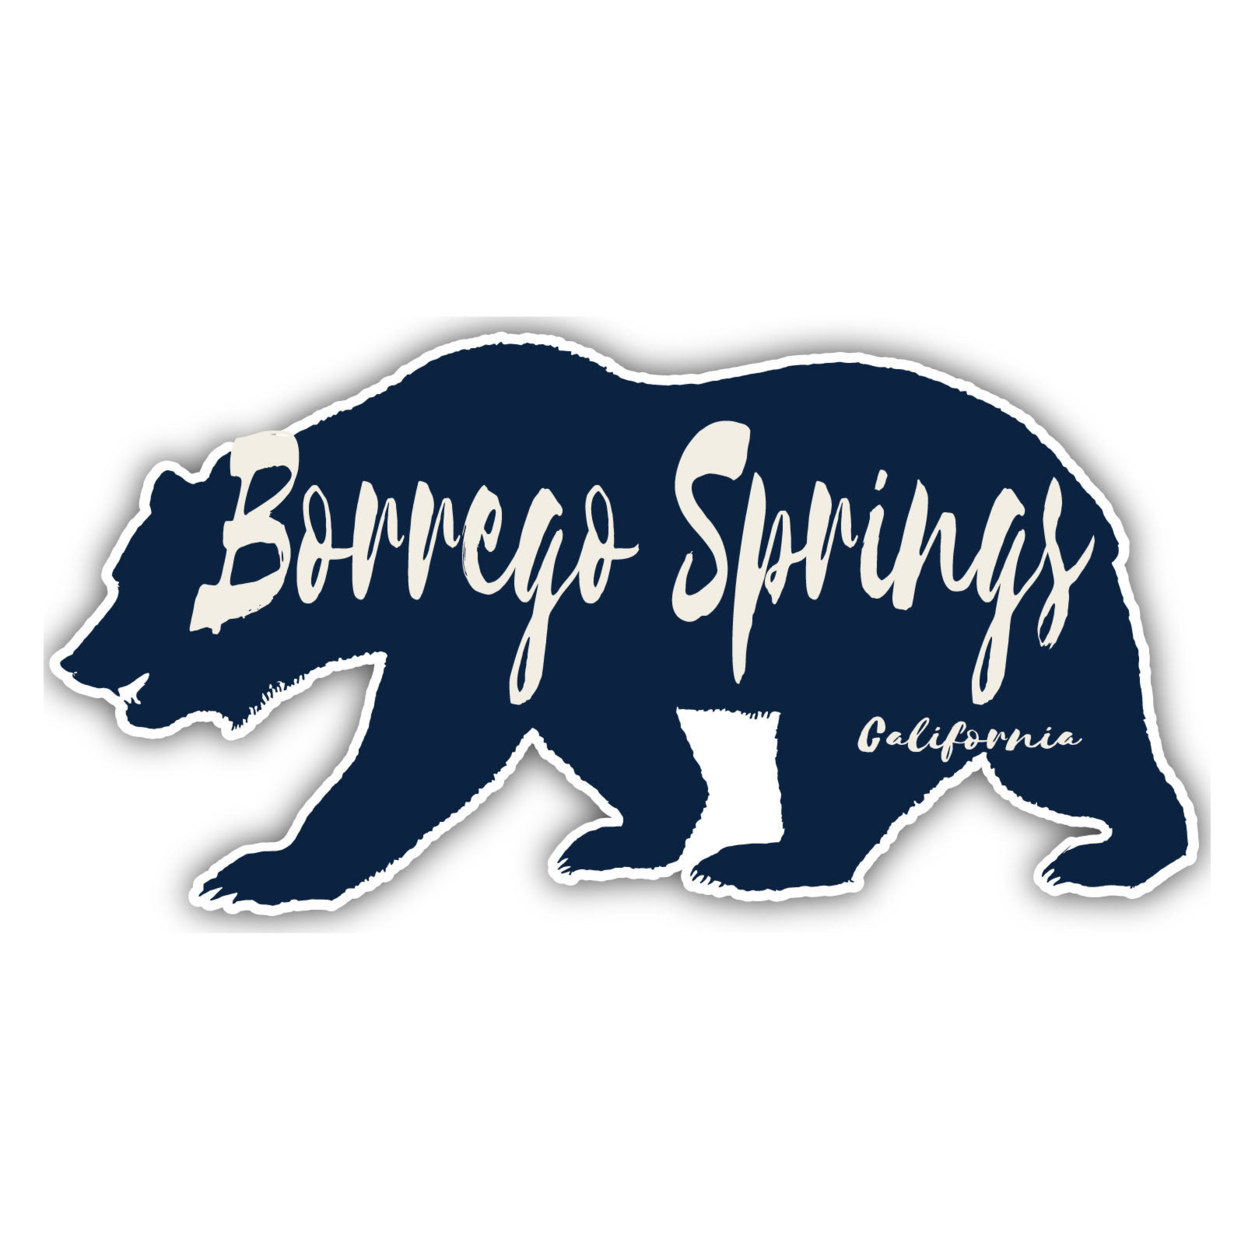 Borrego Springs California Souvenir Decorative Stickers (Choose Theme And Size) - Single Unit, 2-Inch, Bear